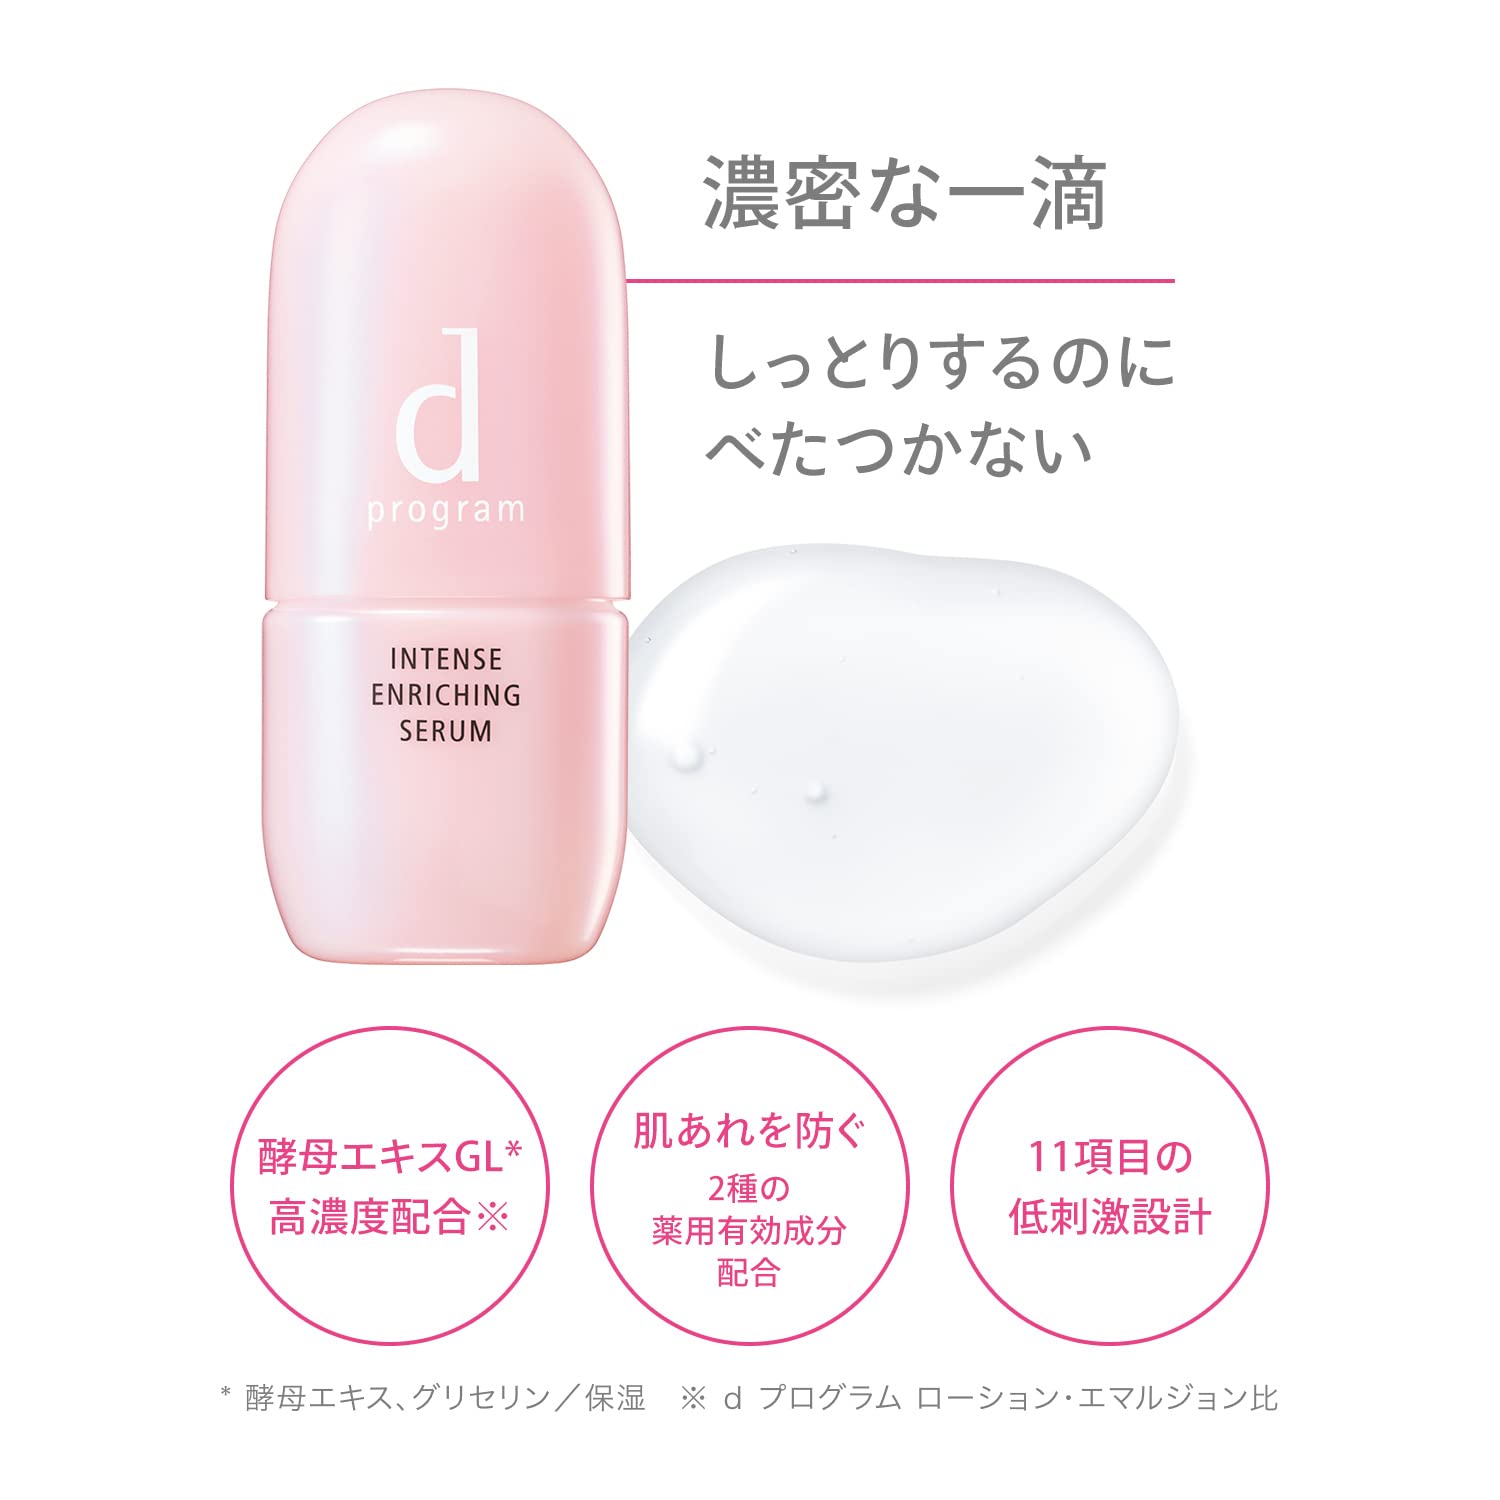 d Program Medicated Dense Serum Intense Enriching Serum, Main Body, Quasi Drug, For Sensitive Skin, Repeated Drying Trouble (45 ml) - YOYO JAPAN